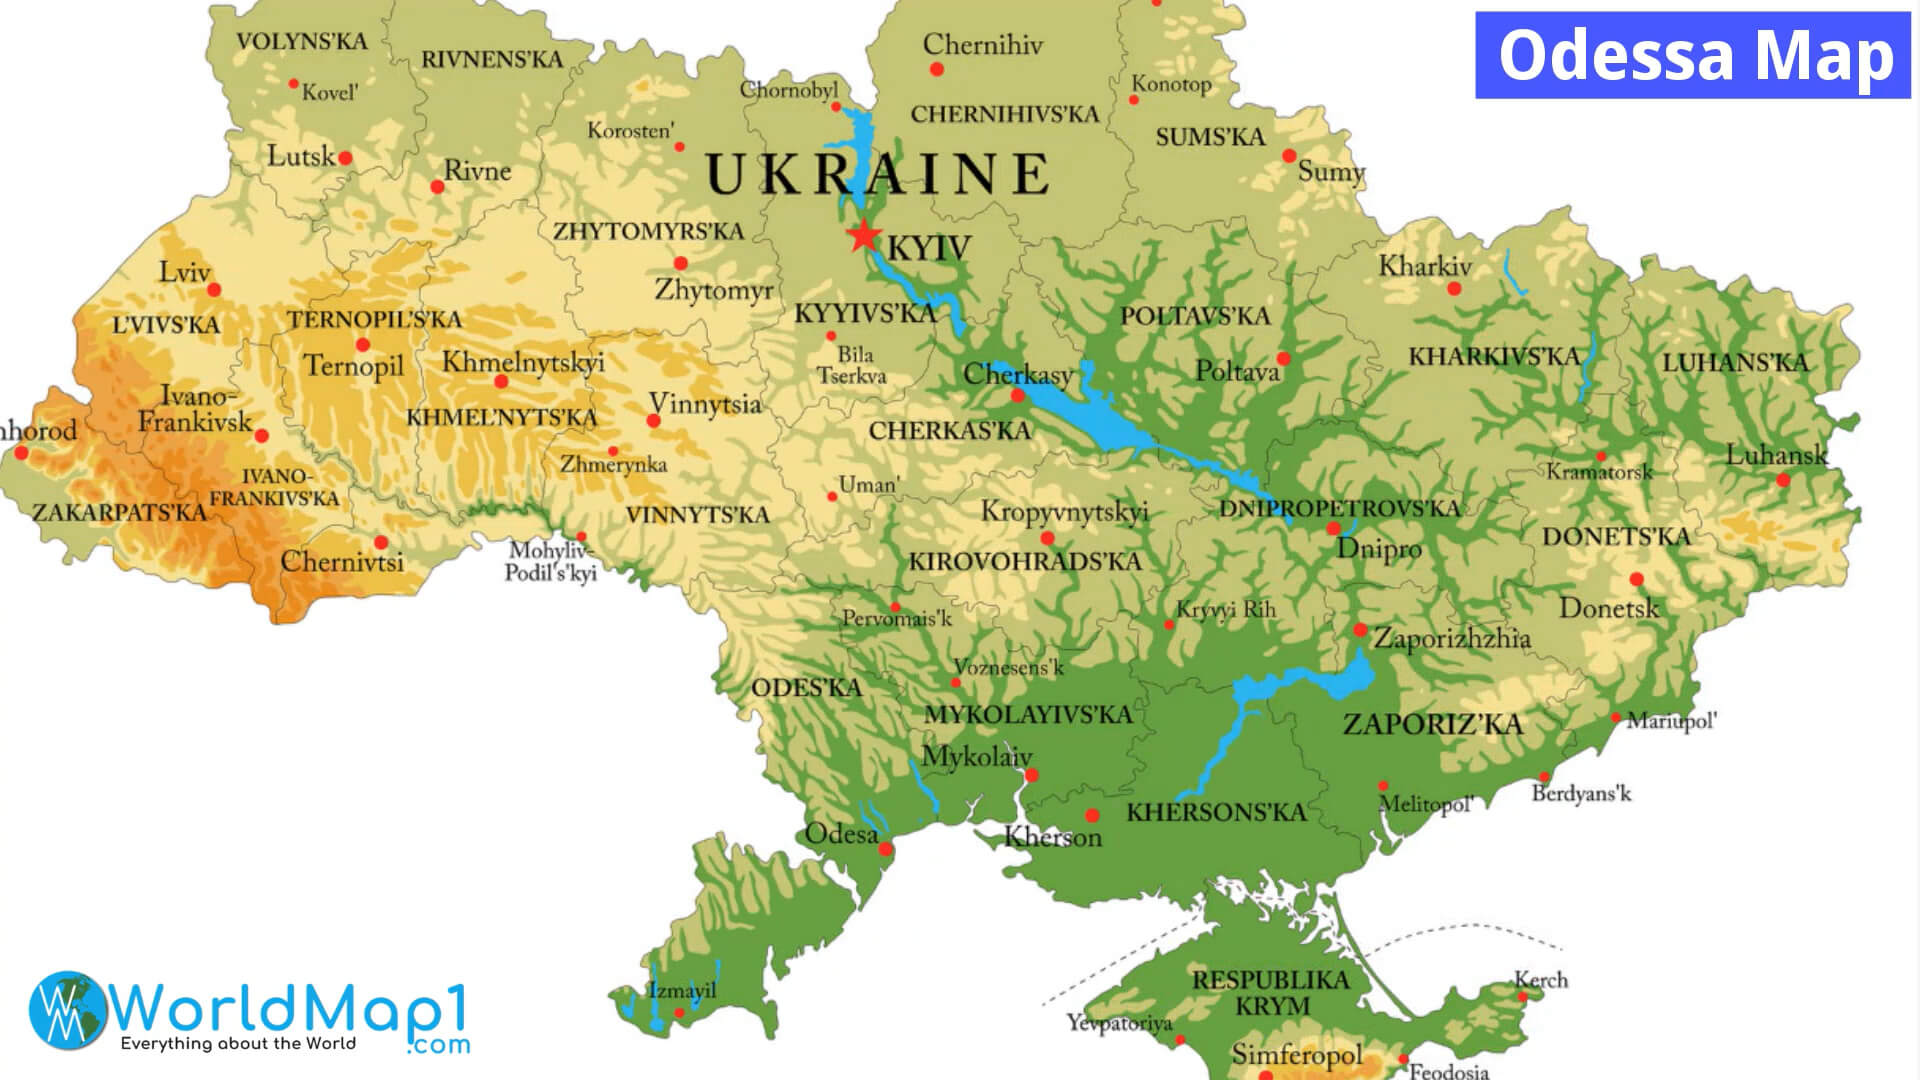 Where is located Odessa in Ukraine